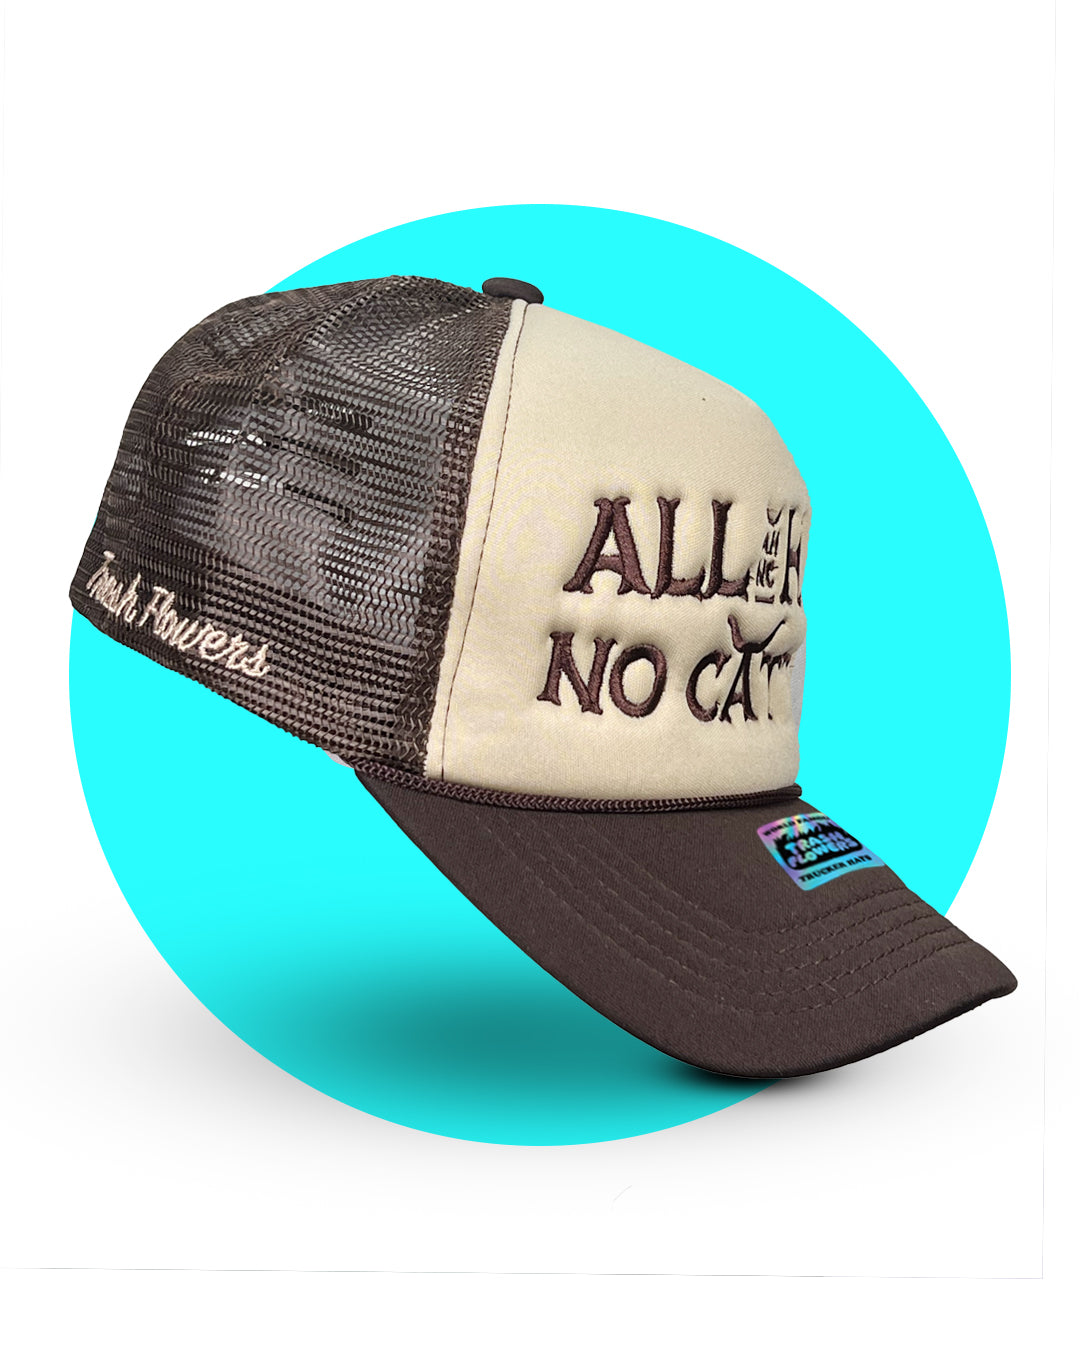 Ltd. Edition All Hat No Cattle Trucker Hat